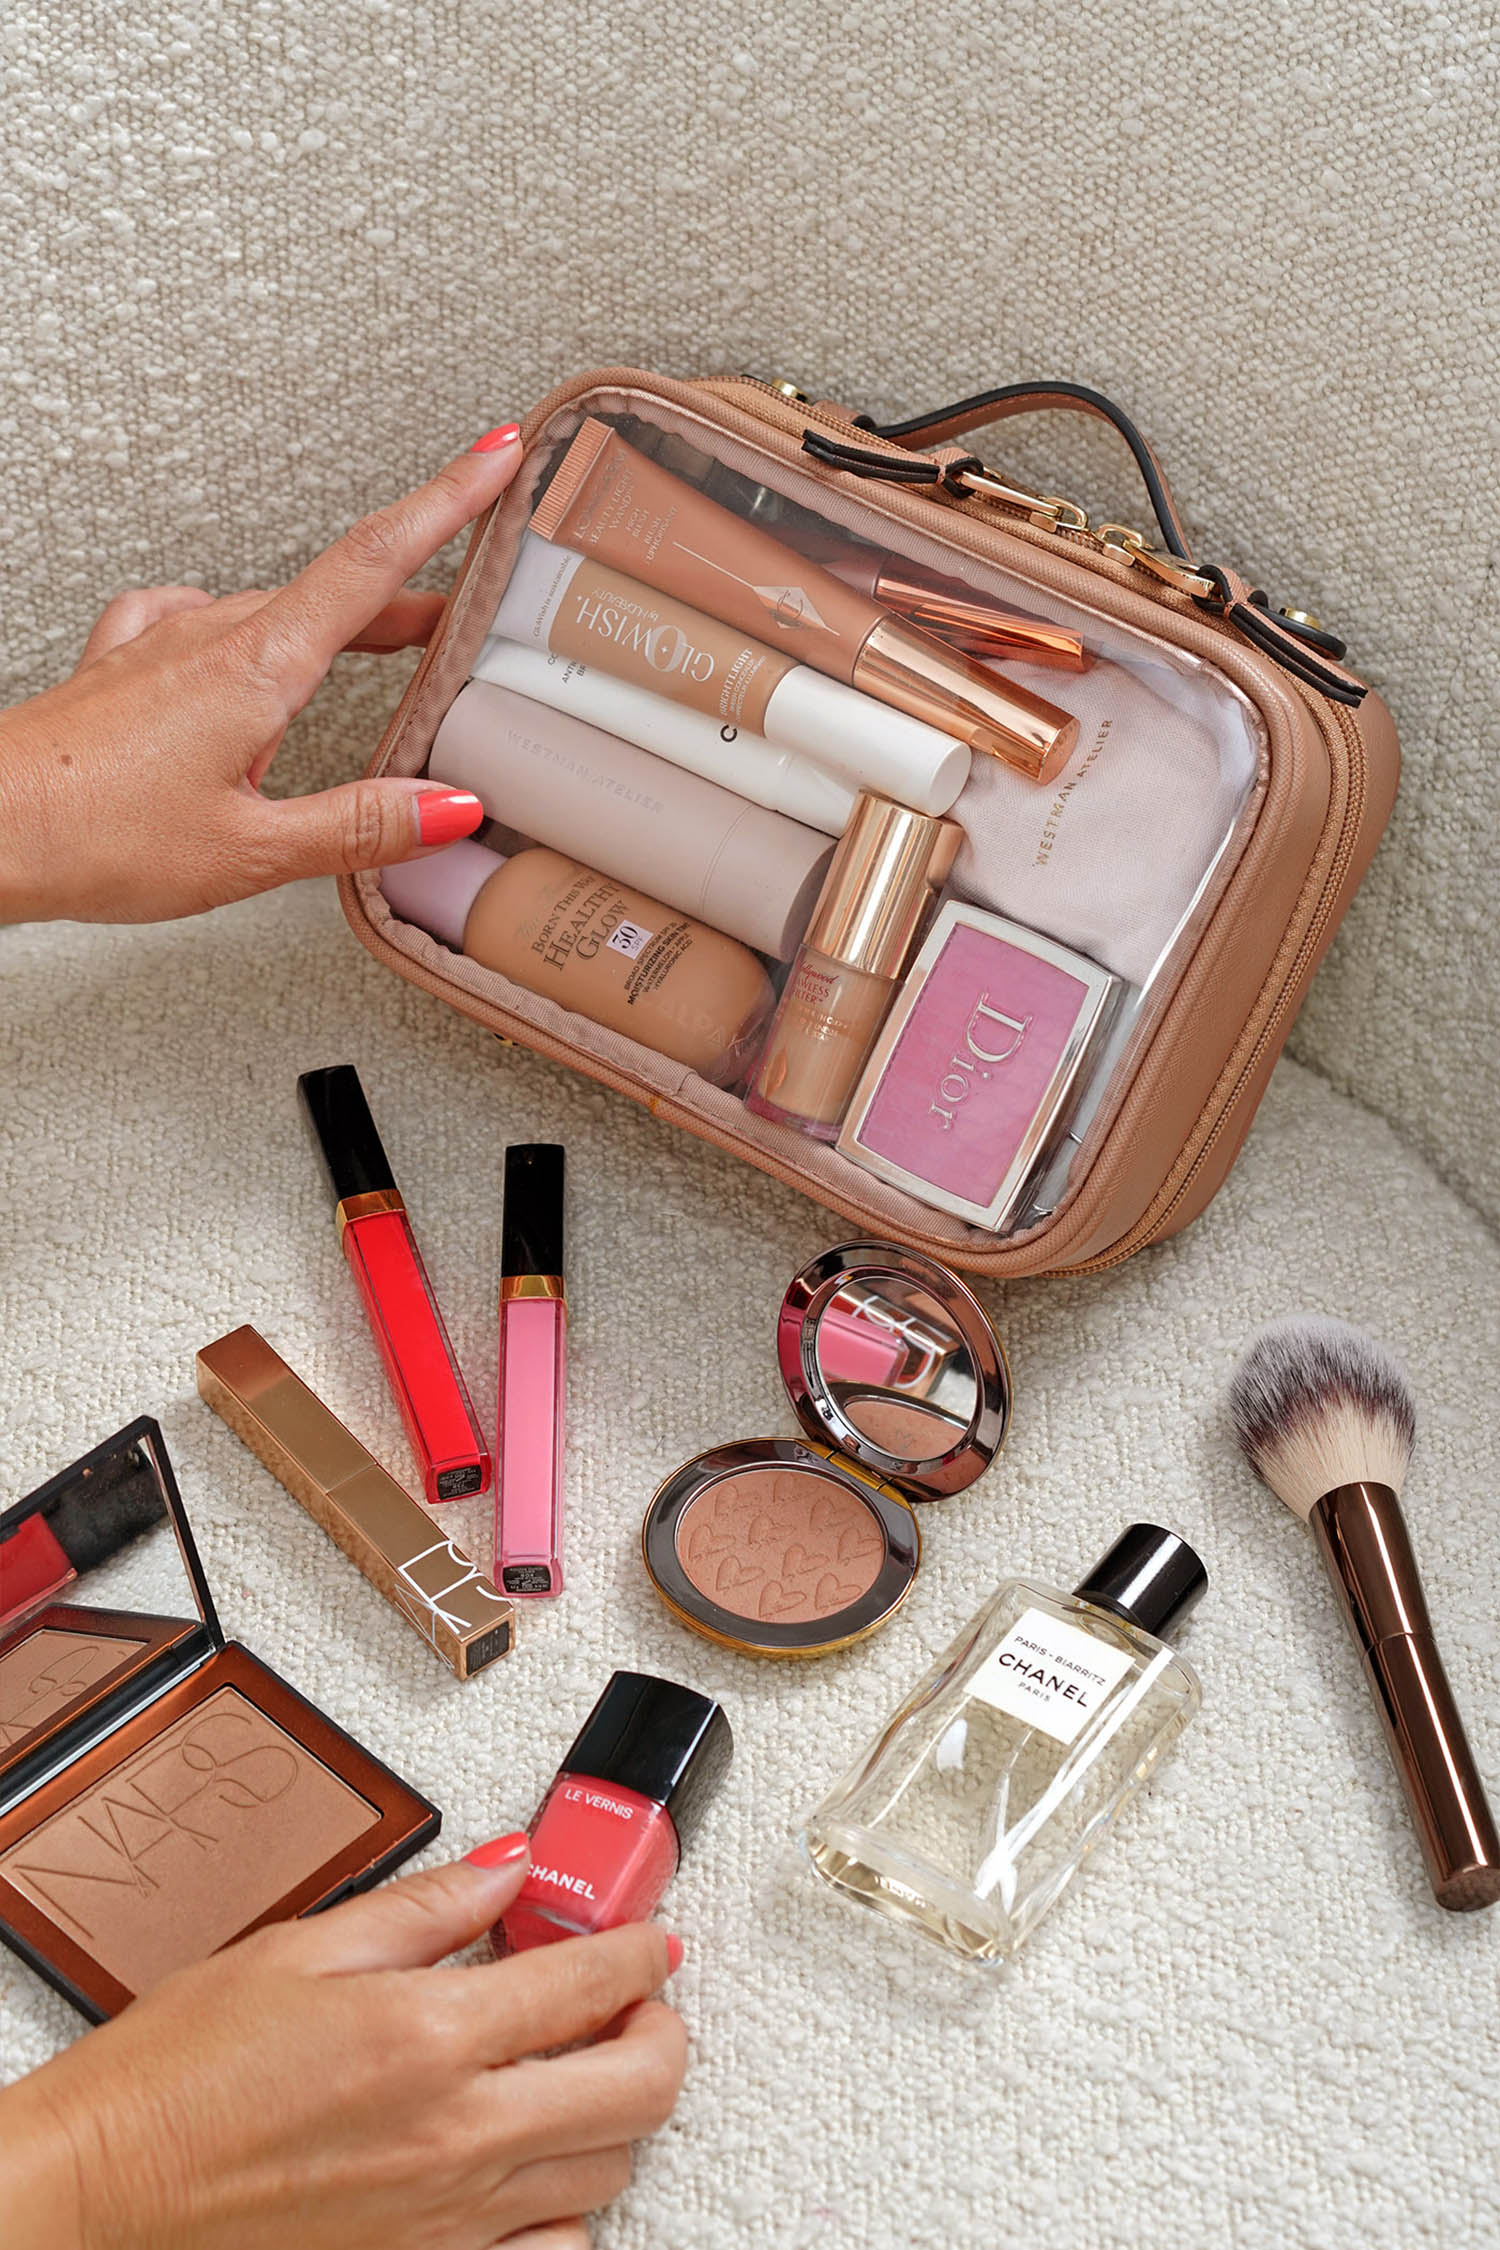 chanel makeup bag case